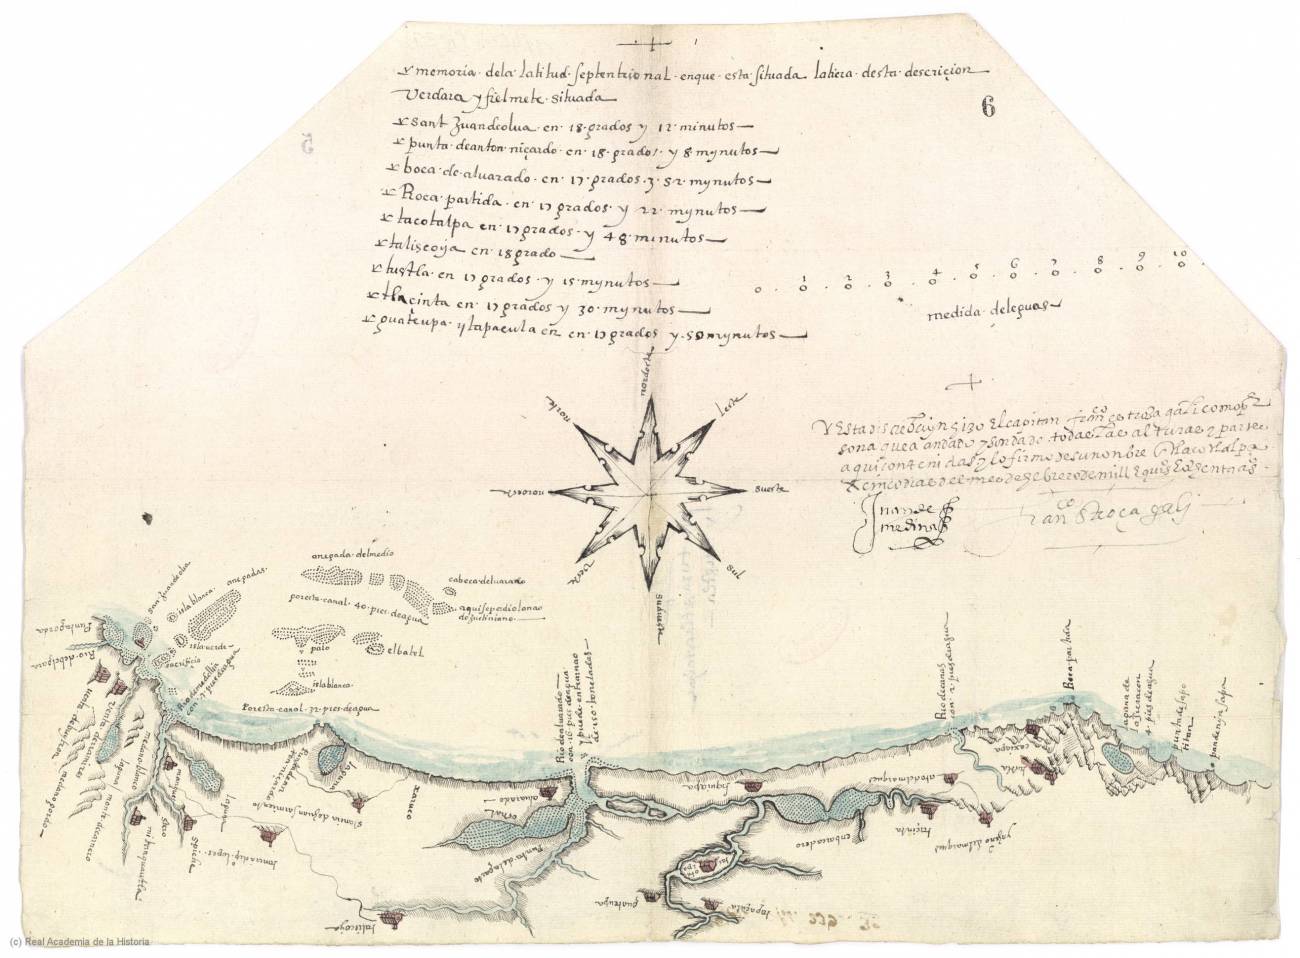 Mapa de Tlacotalpa del navegante sevillano Francisco Gali